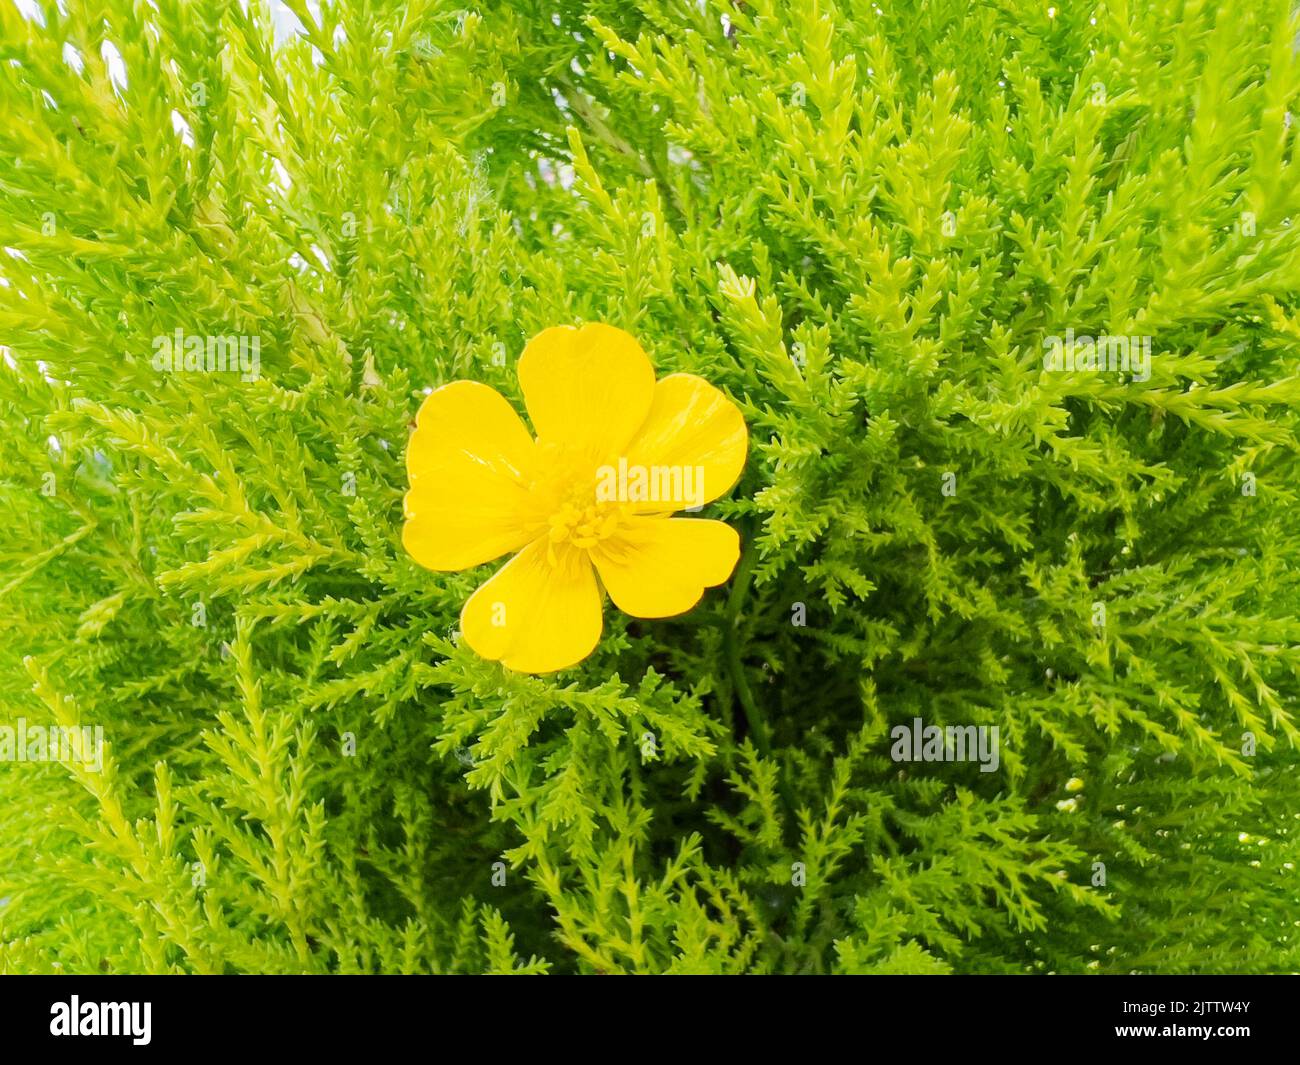 Ranunculus bulbosus, commonly known as bulbous flower clos-up Stock Photo